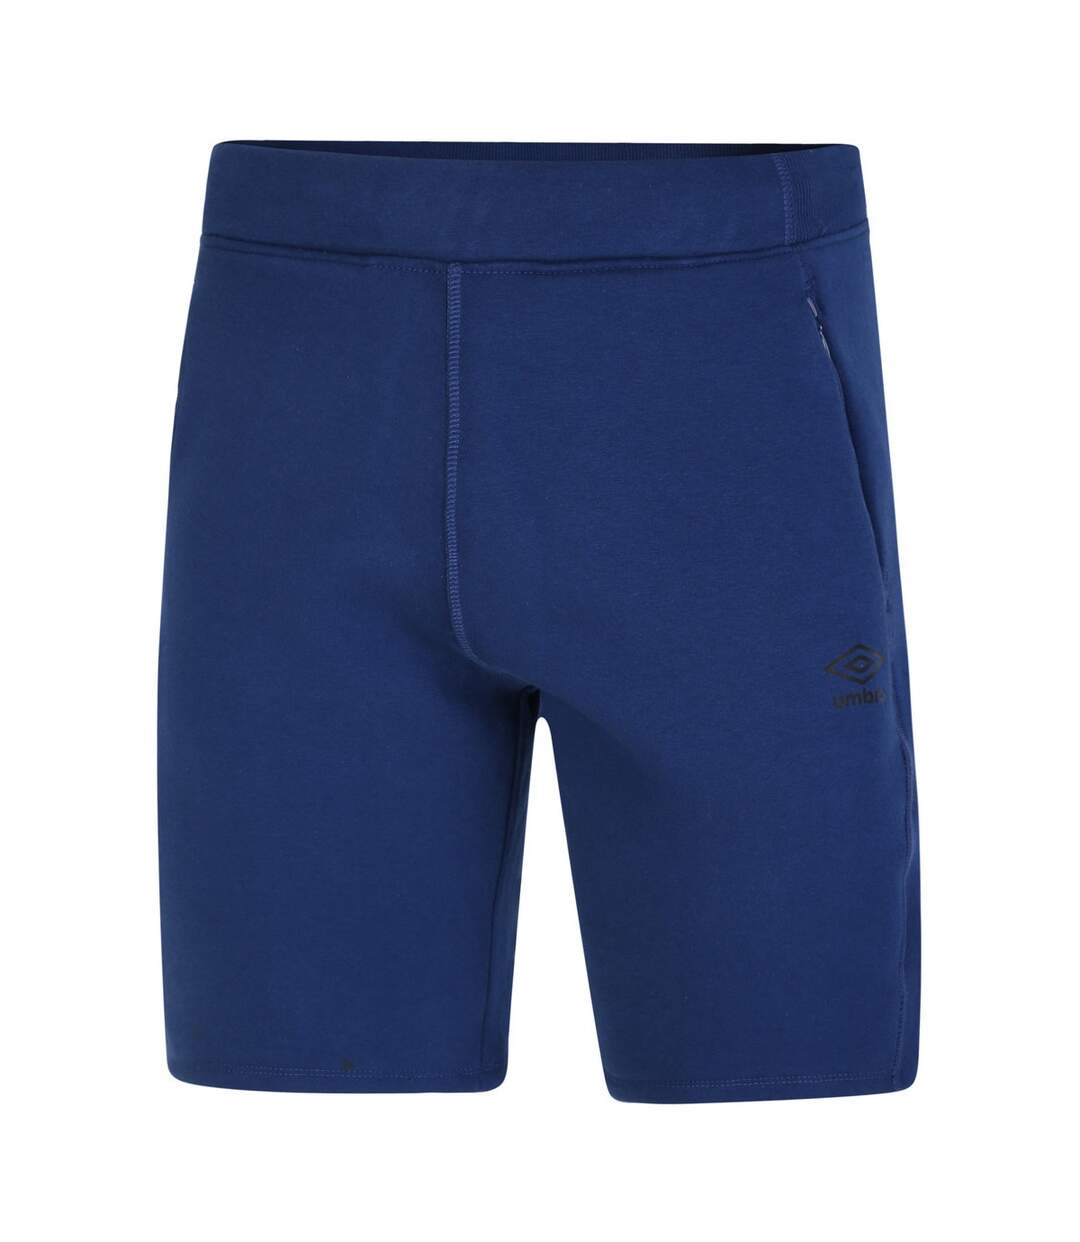 Umbro Mens Pro Elite Fleece Shorts (Navy)